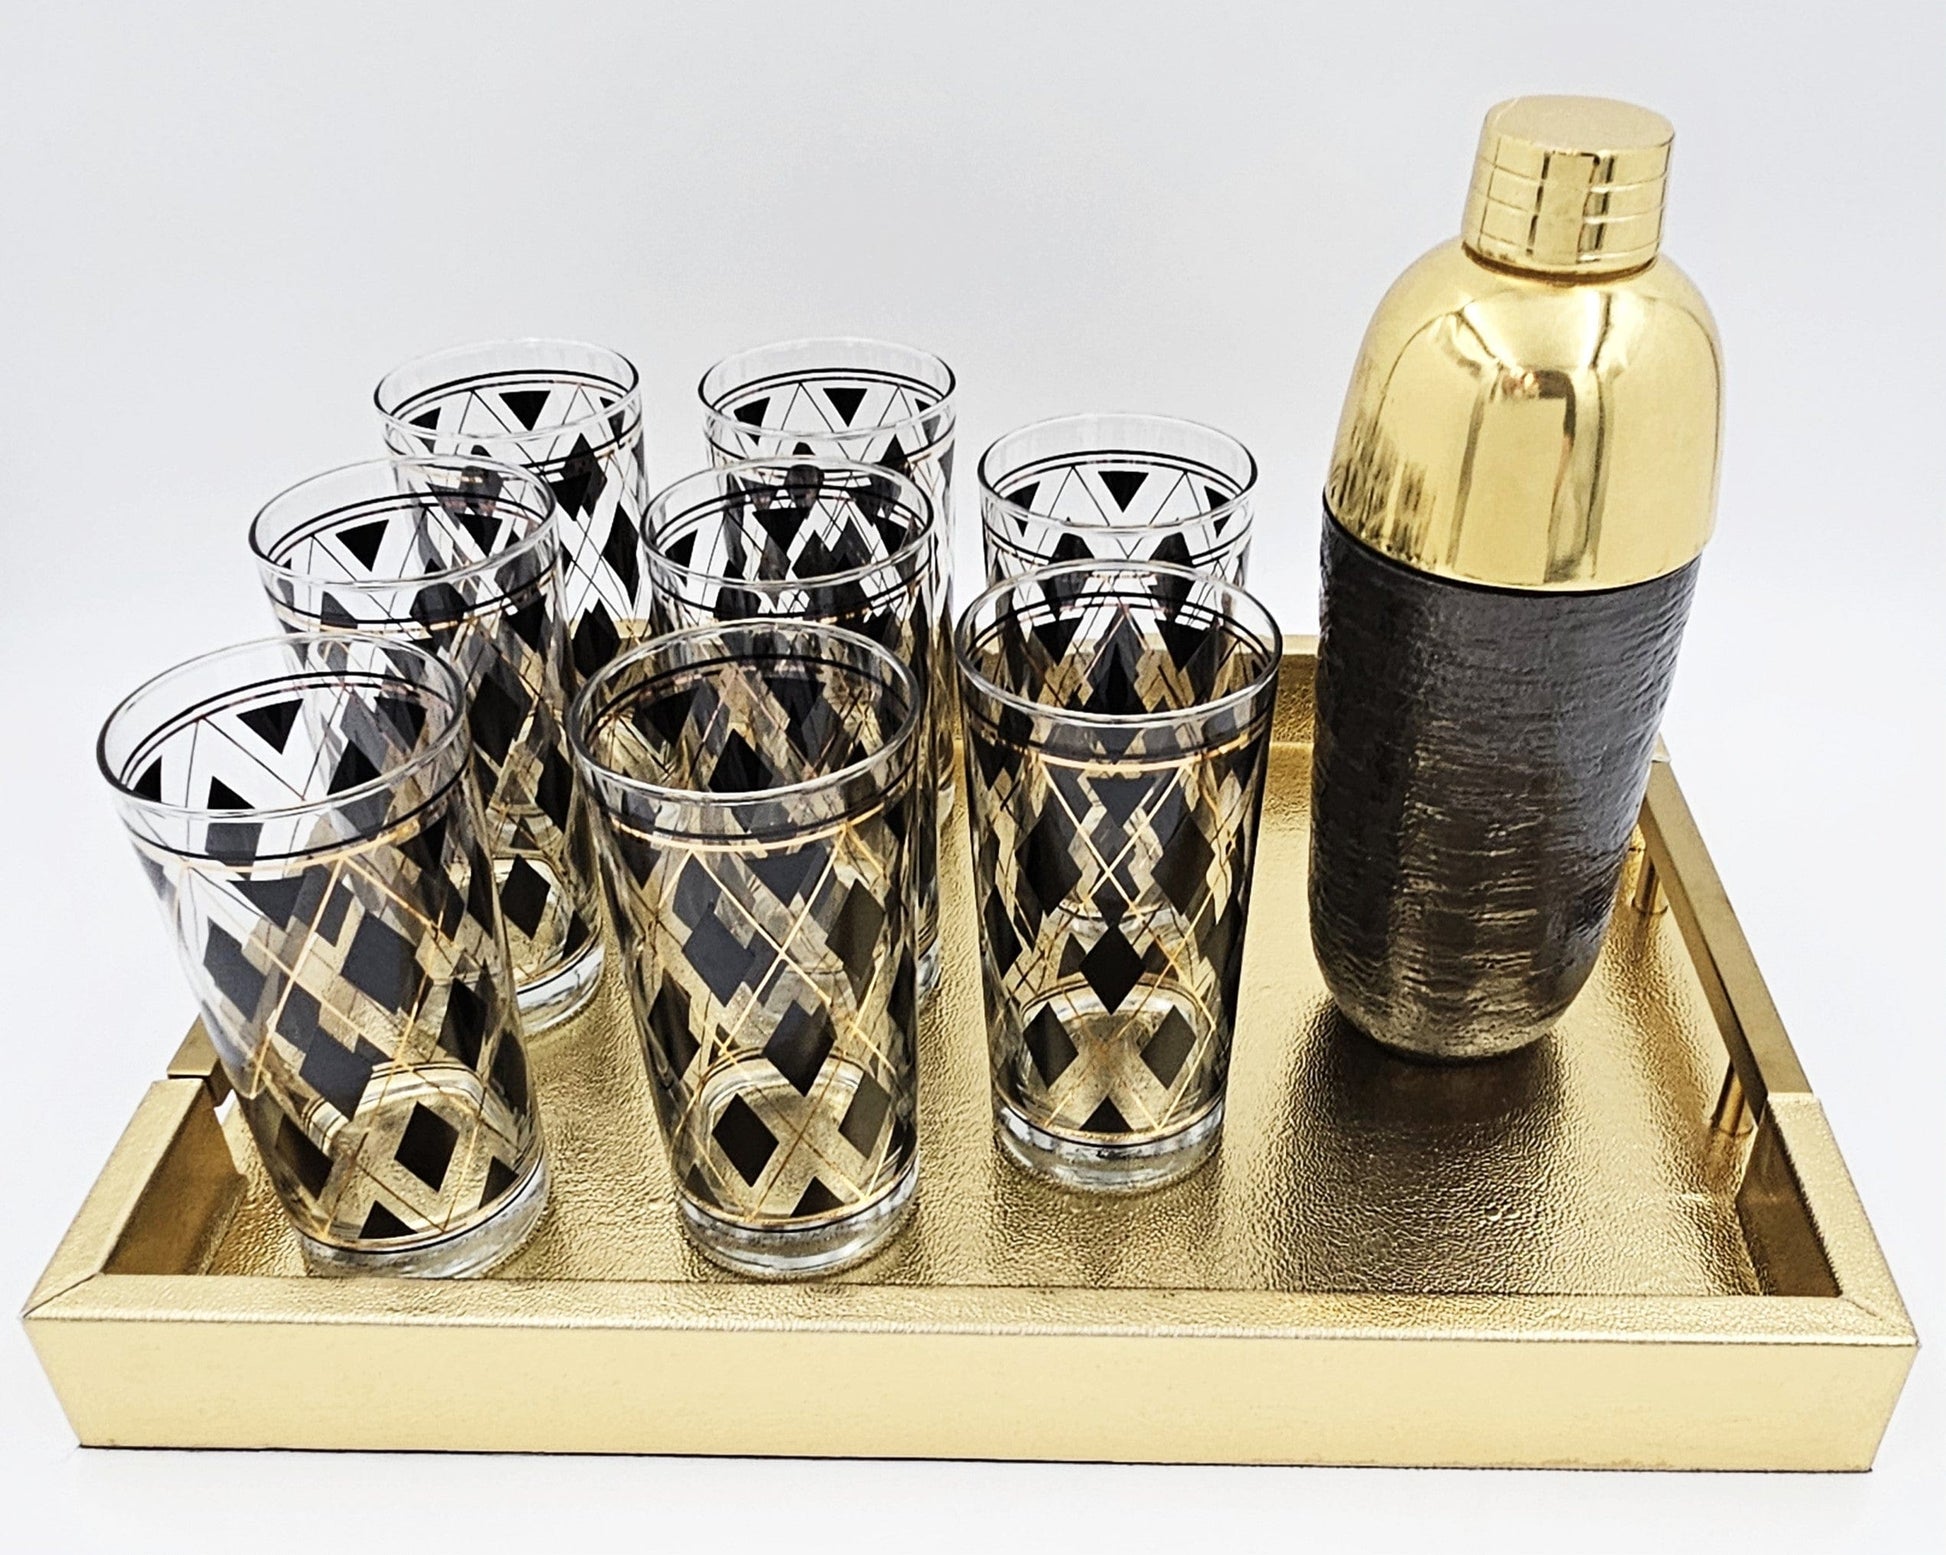 Cera Barware NOS Libbey Black Gold Argyle Glasses w/ Nima Oberoi Lunares Shaker Tray Set